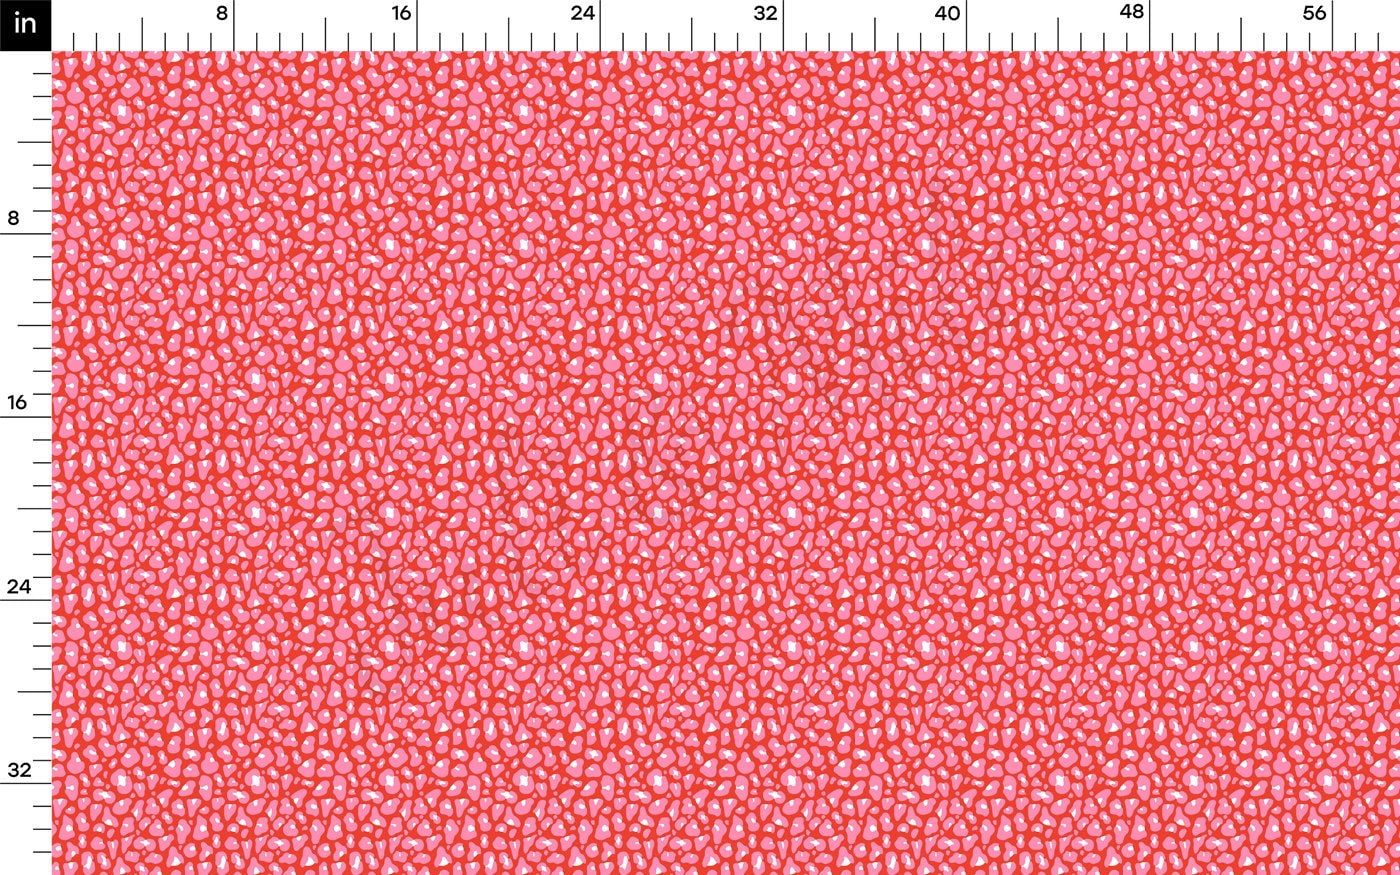 Rib Knit Fabric  RBK2244 Valentine's Day